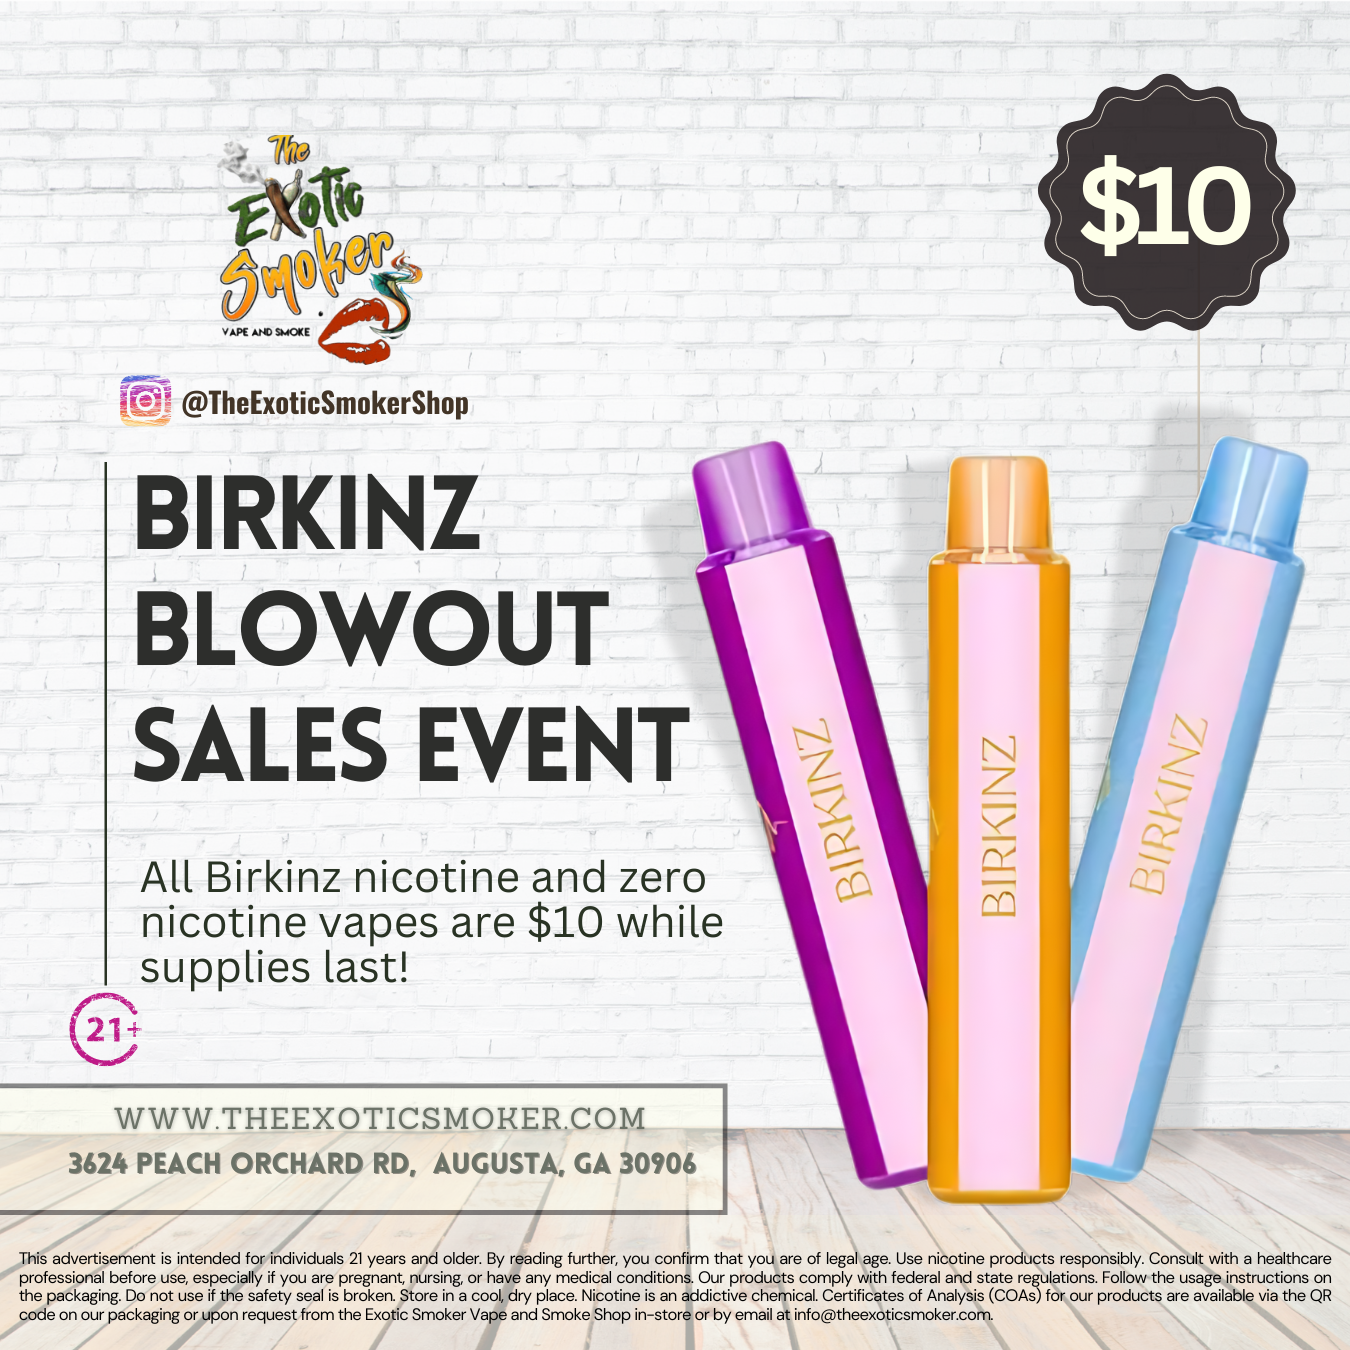 The Exotic Smoker Vape and Smoke Shop - Augusta - Georgia - Birkinz Blowout Sales Event displaying Birkinz vapes